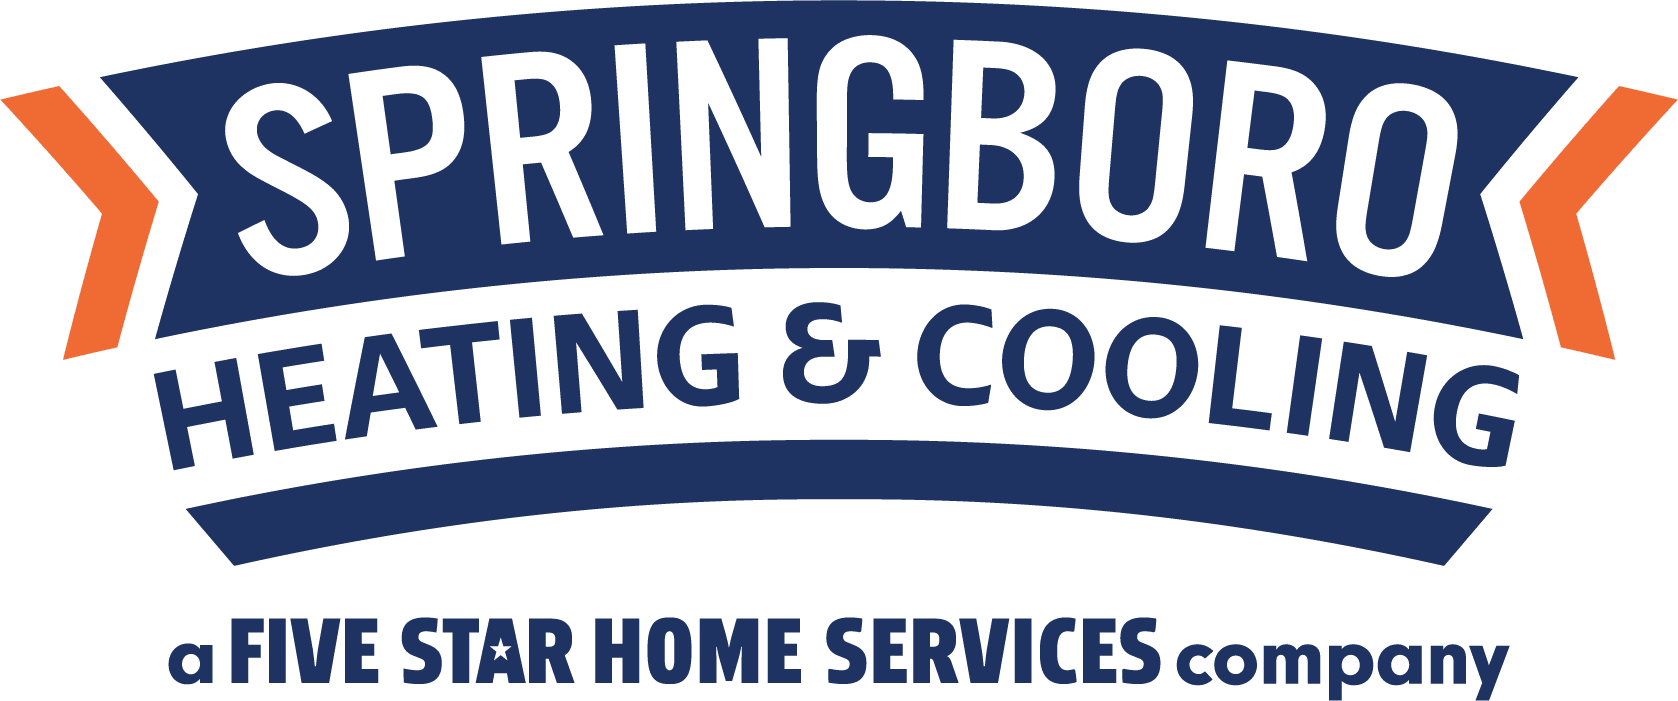 Springboro Heating & Cooling